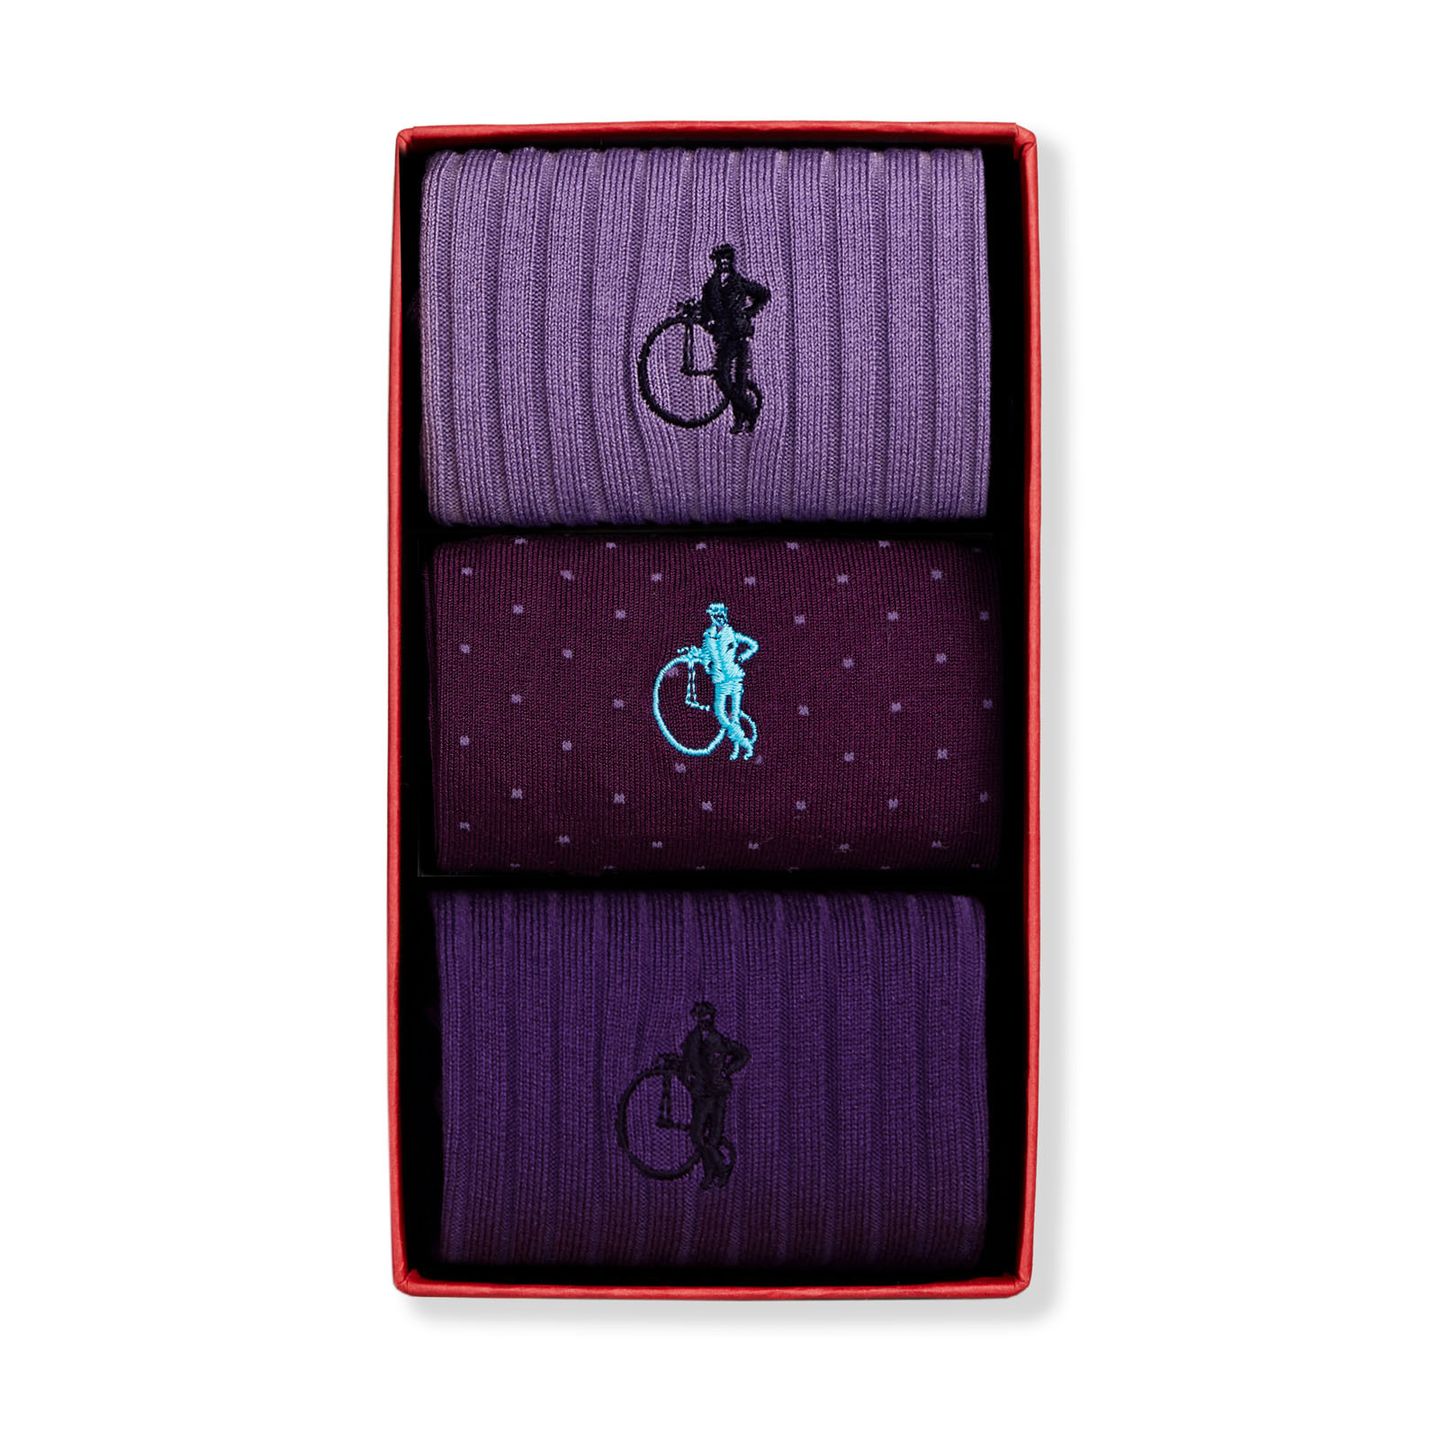 3 pair box of purple socks with one polka dot pattern